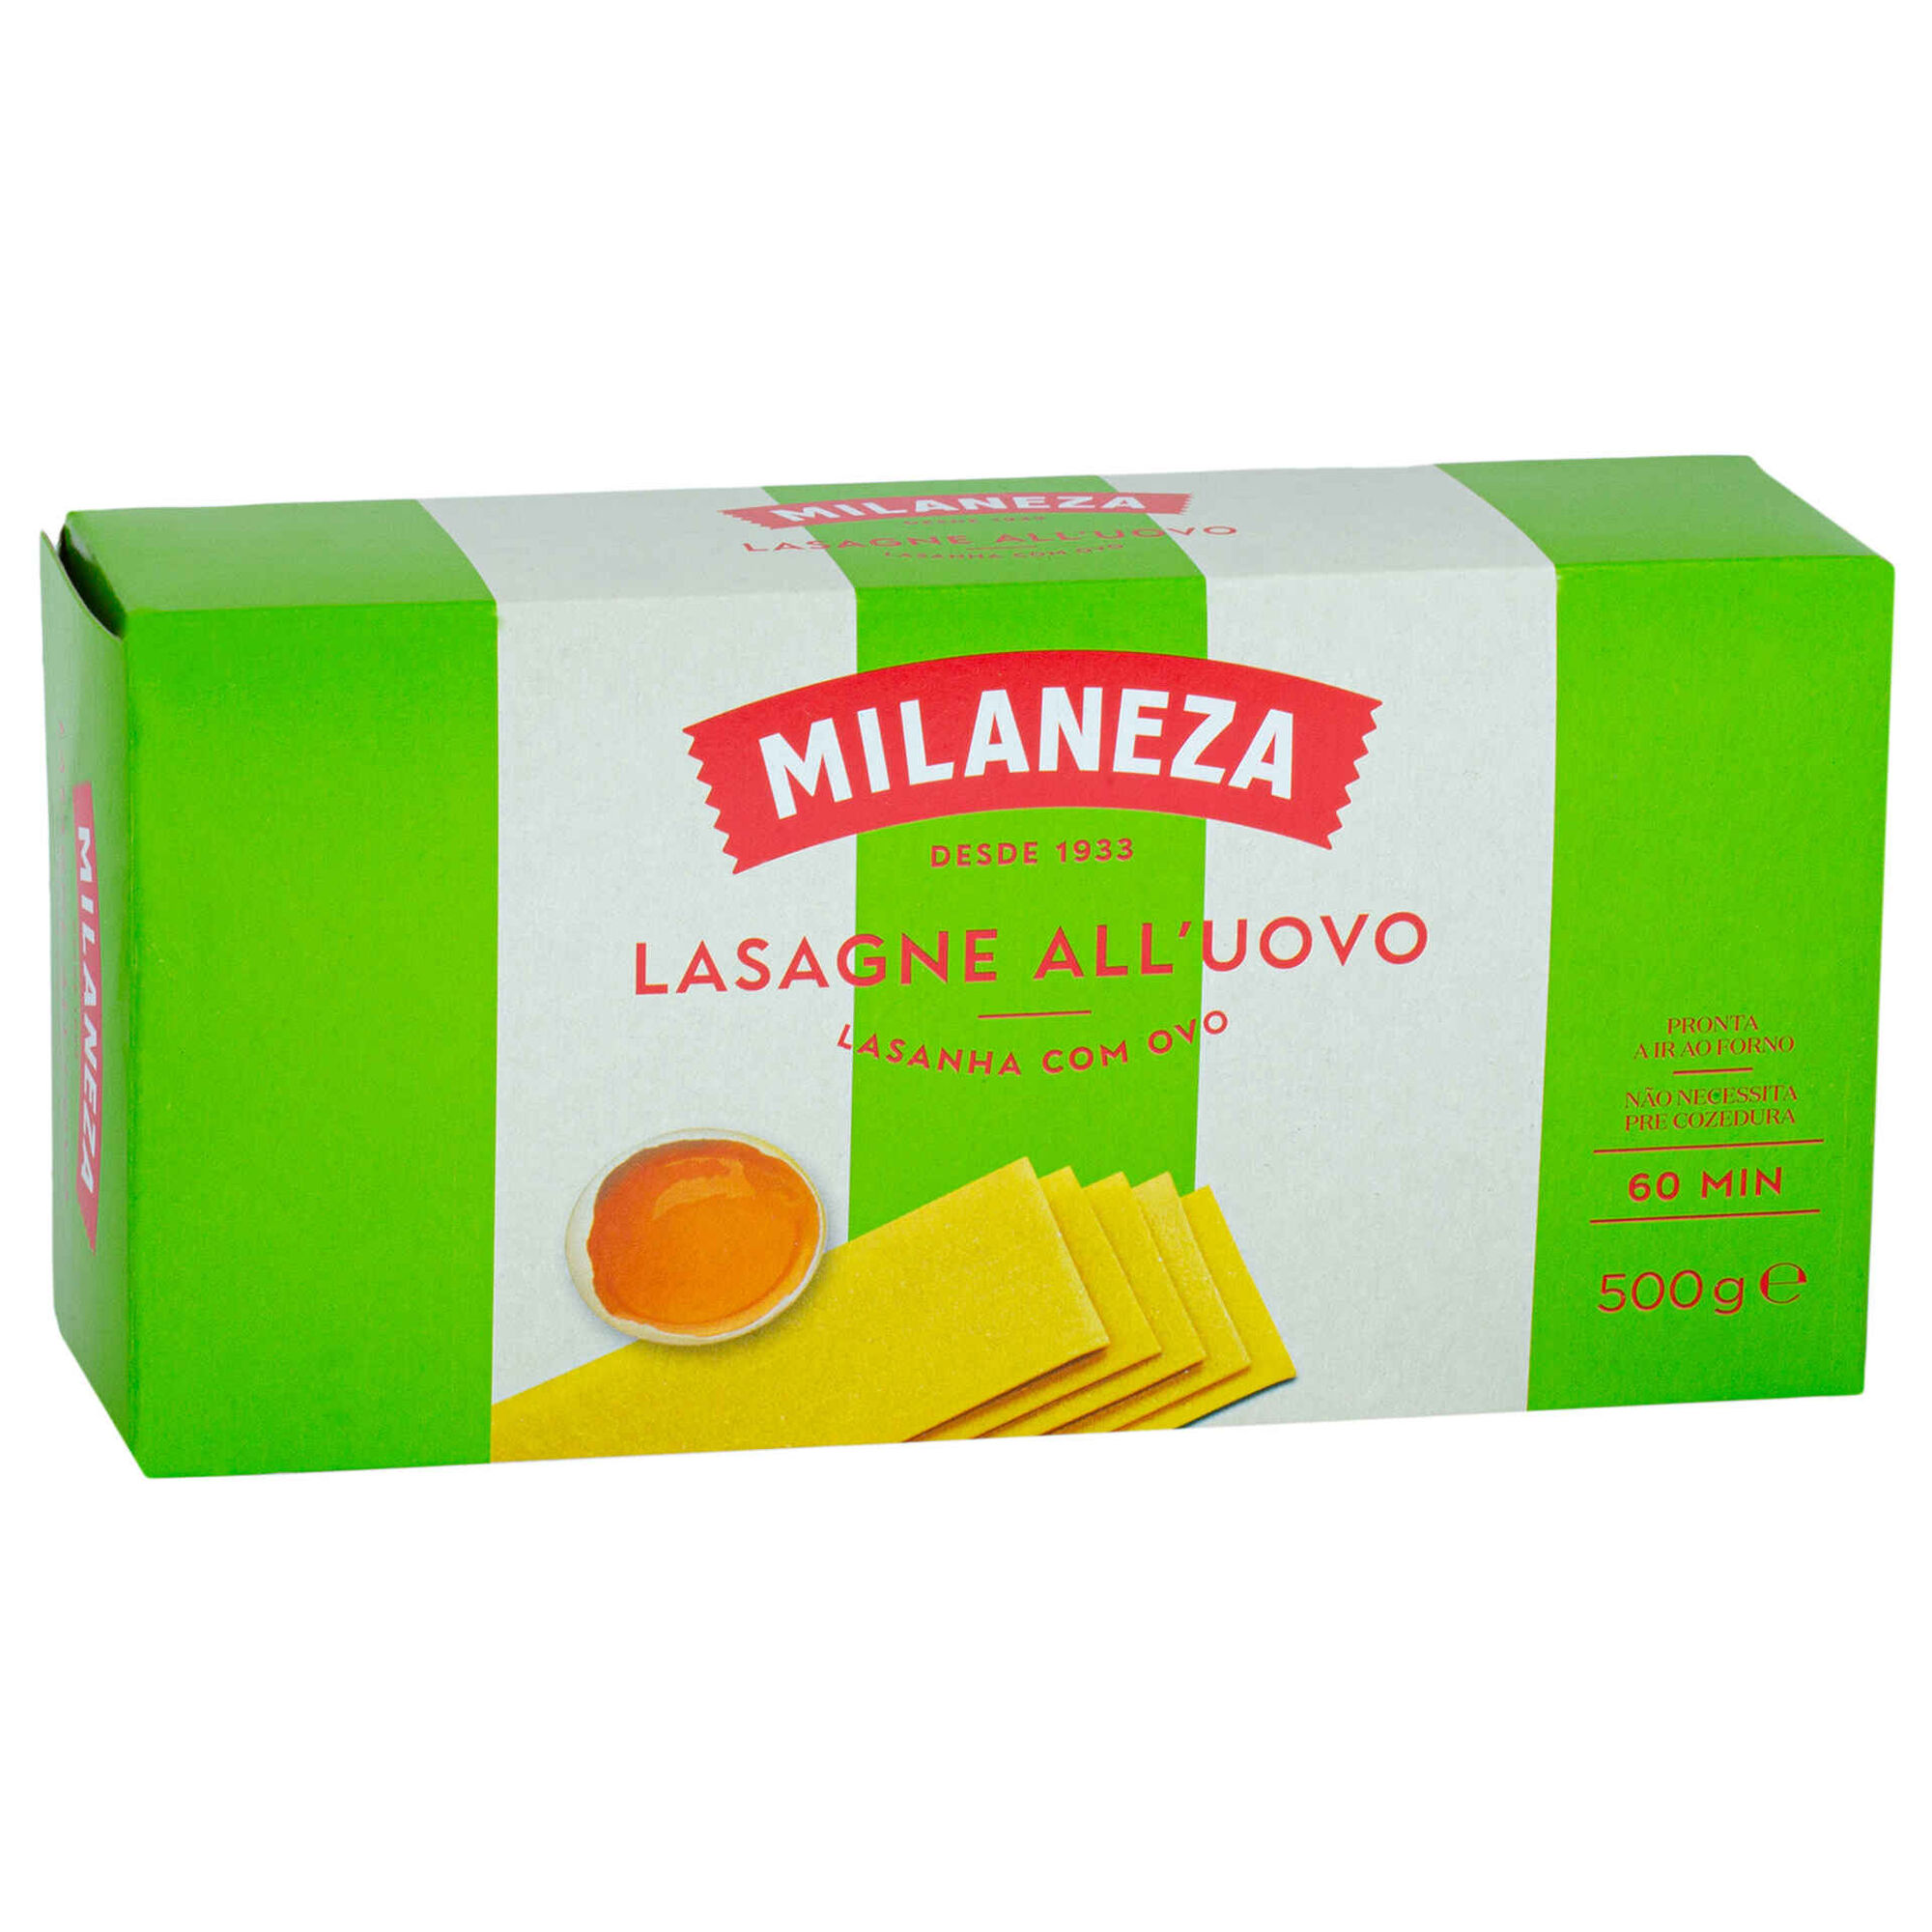 Milaneza lasagne all’uovo – lasagne – 500g